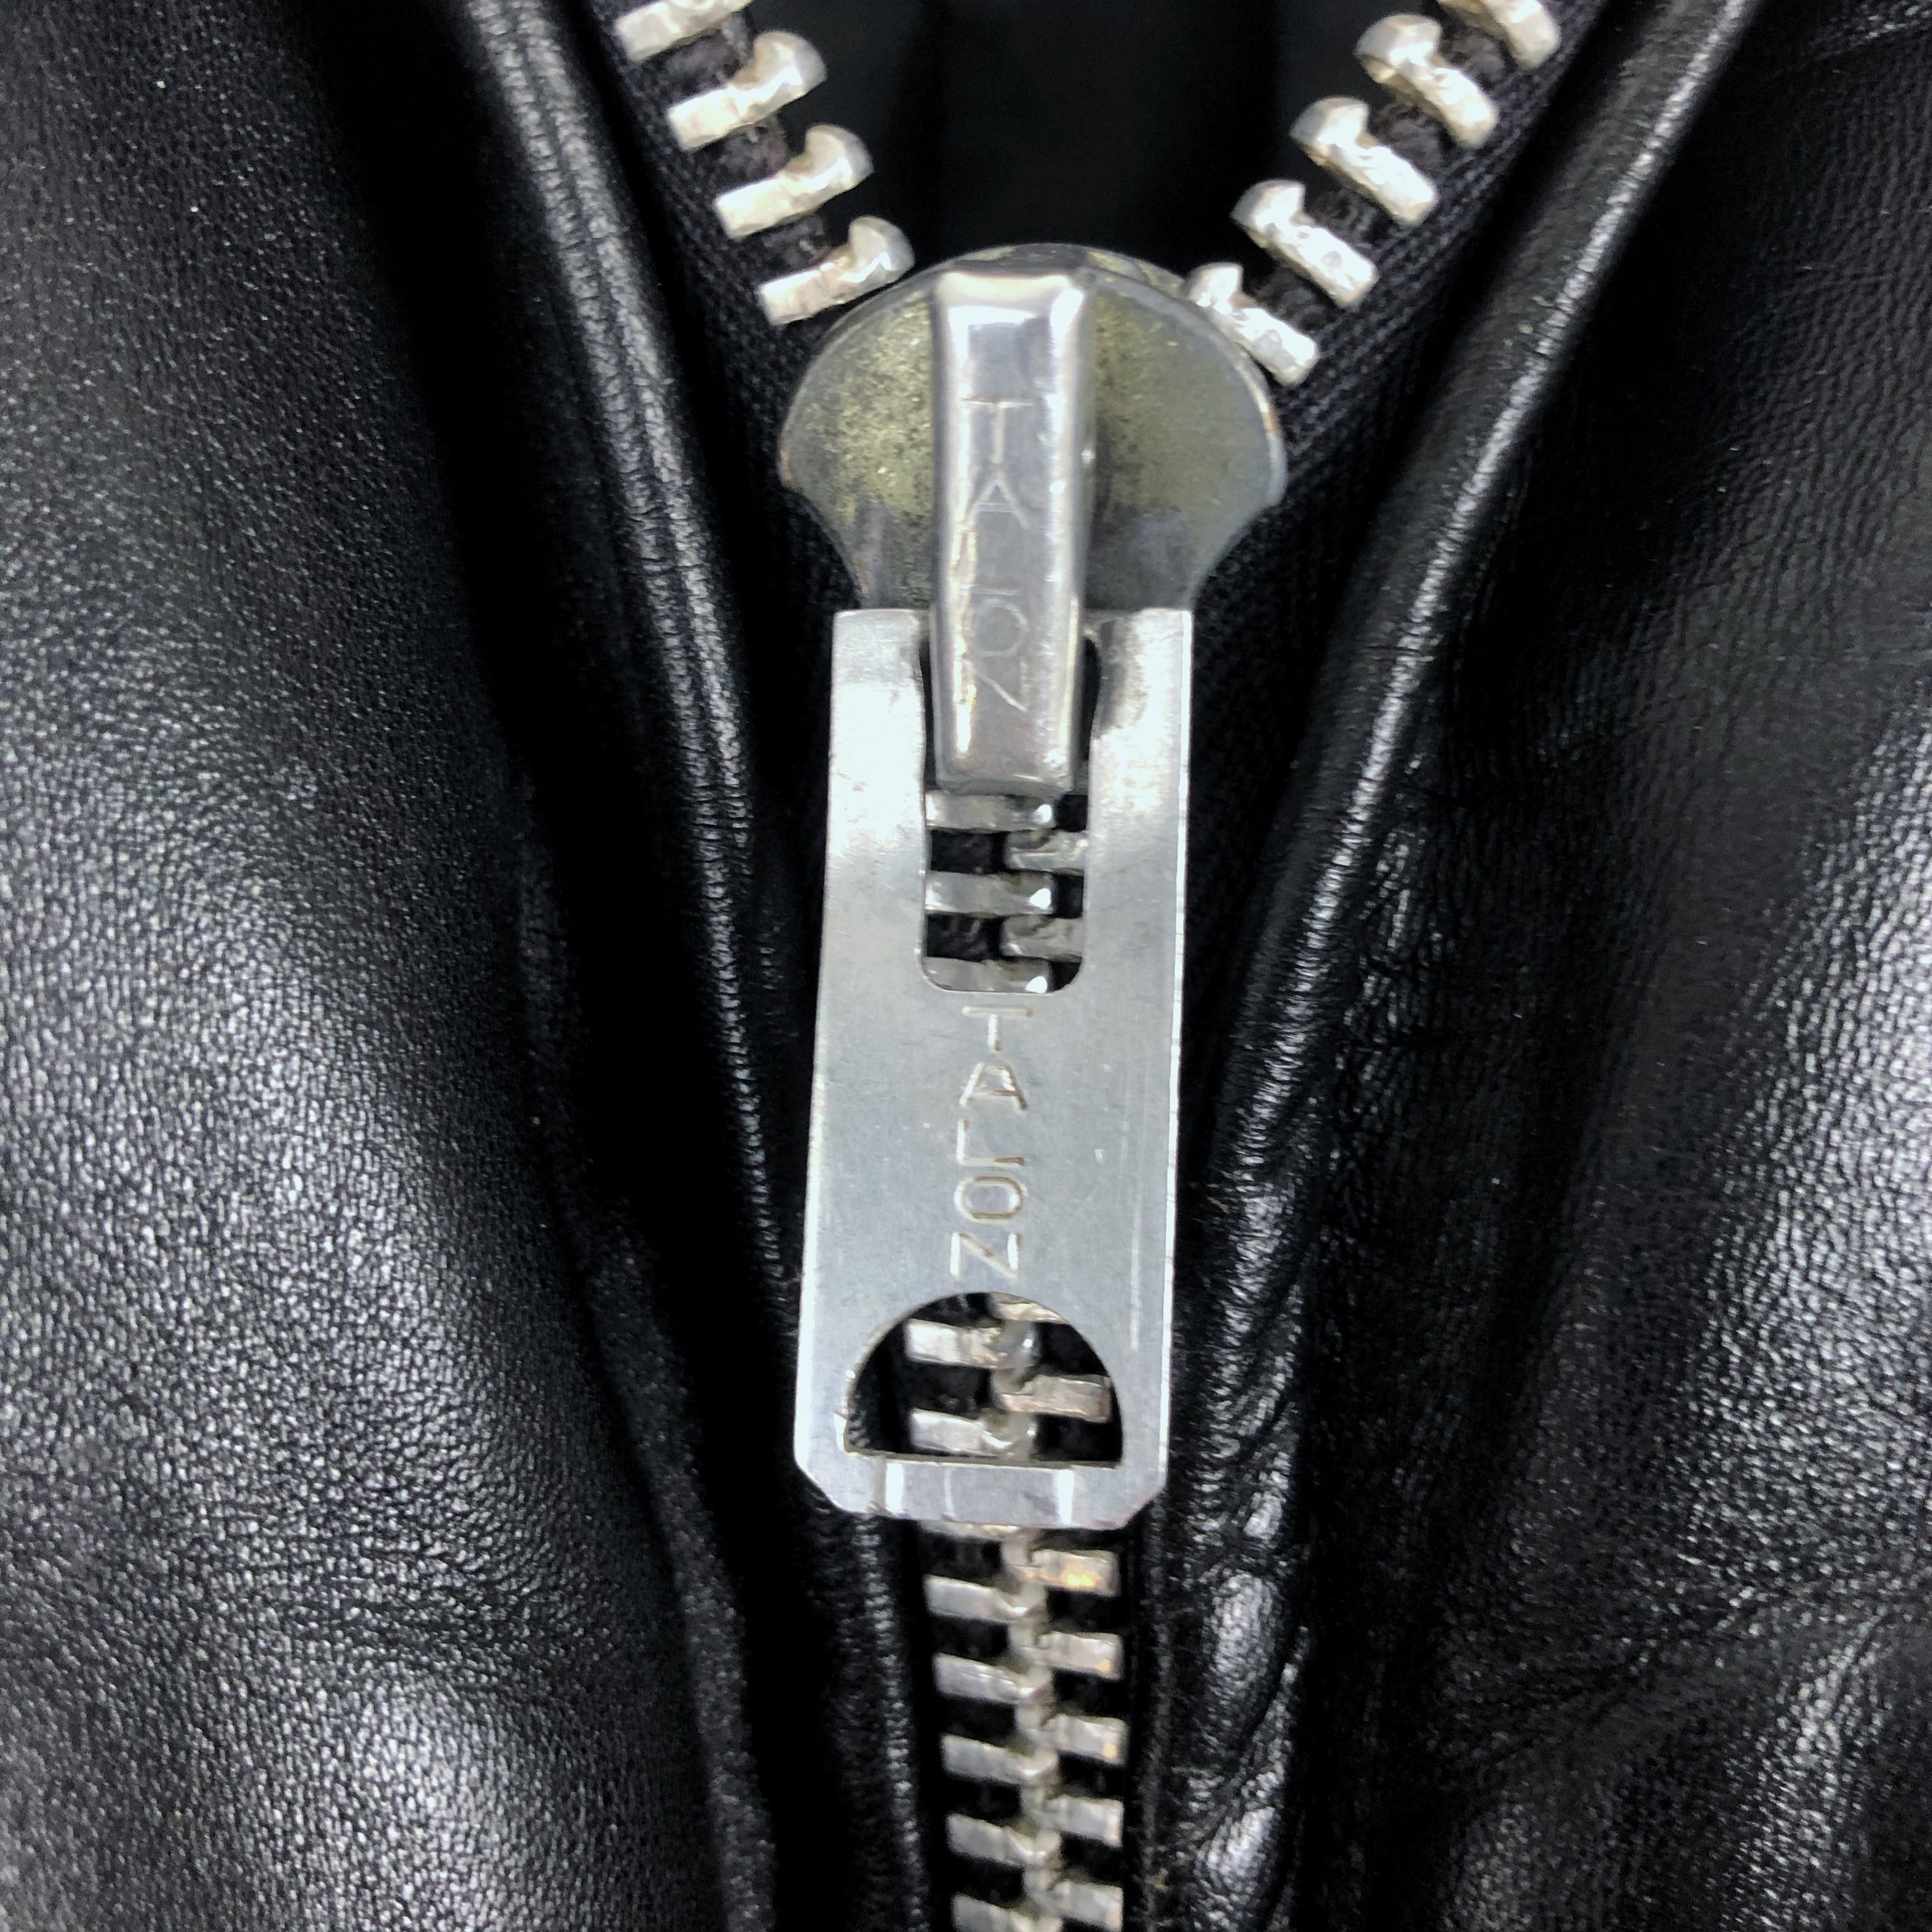 Leather Jacket Zipper